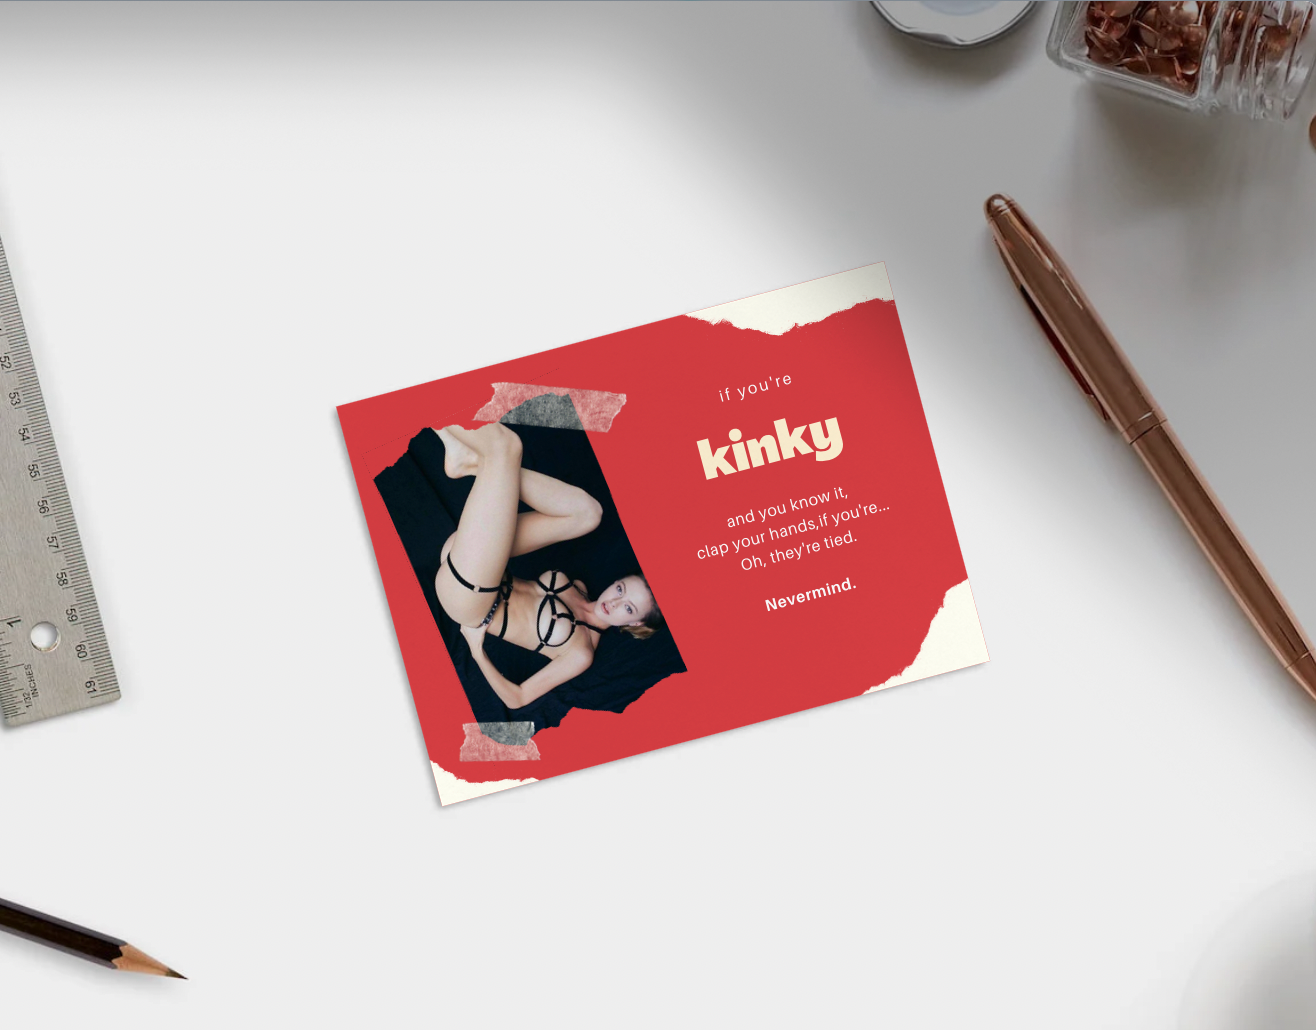 If you are kinky and you know it / Kinky postcard: Christmas edition